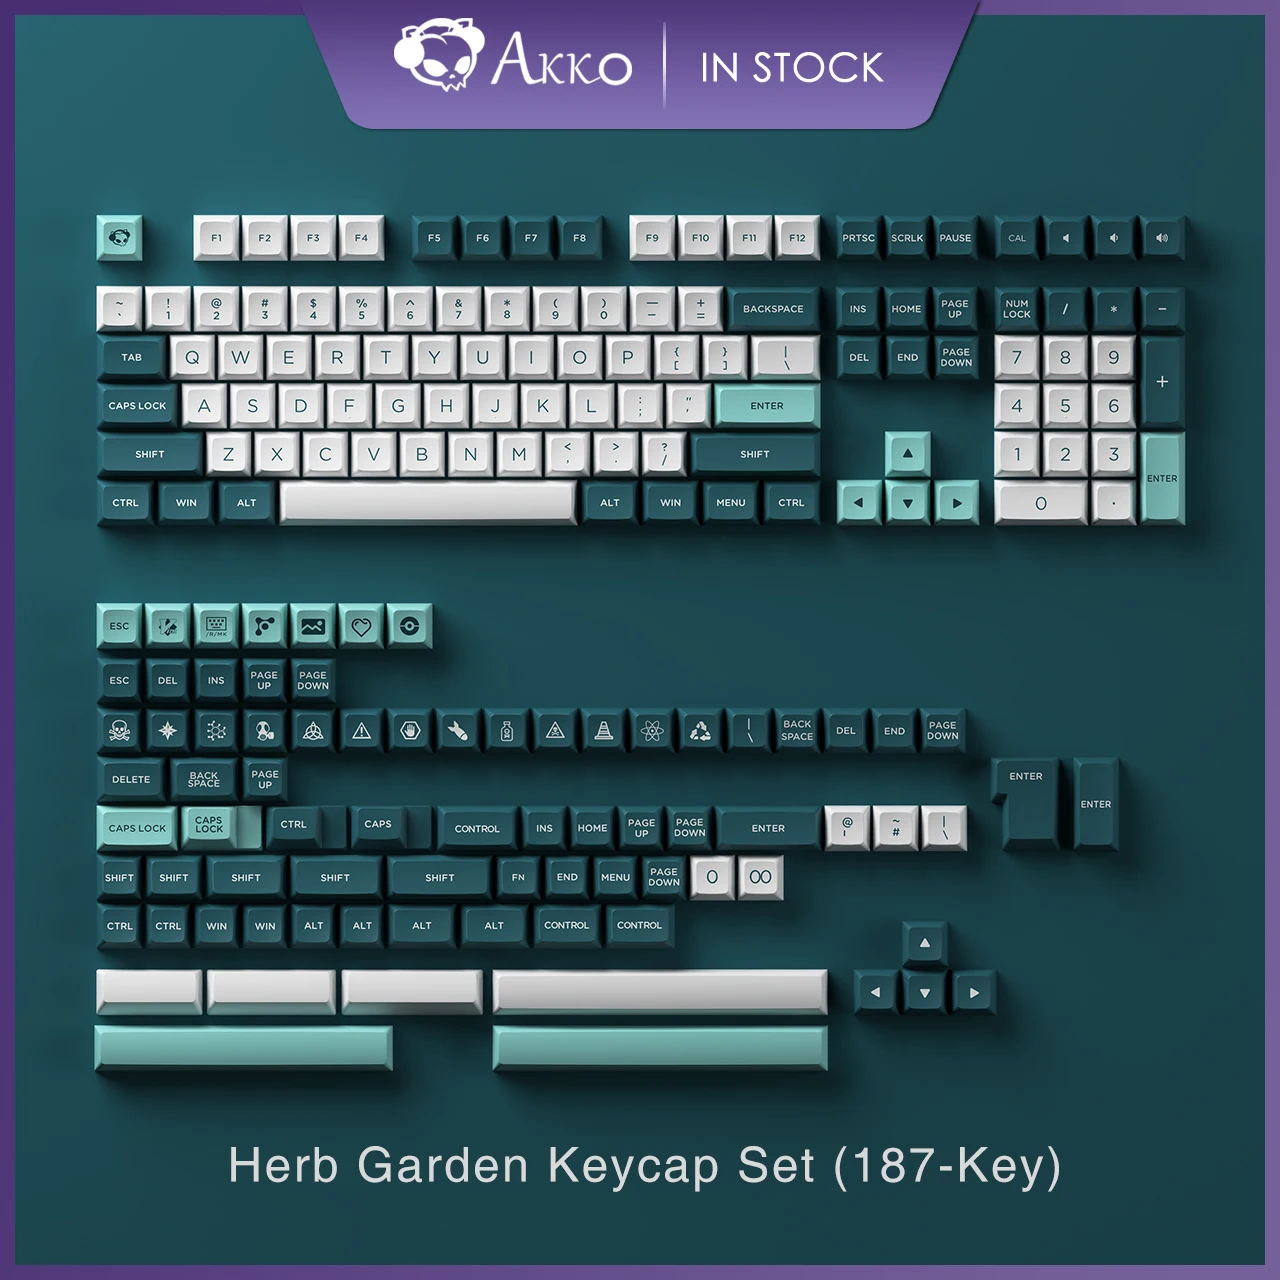 Akko Herb Garden Keycap Set 187 key PBT Double Shot OSA Profile Mechanical Custom Keyboard Keycaps - Pudding Keycap